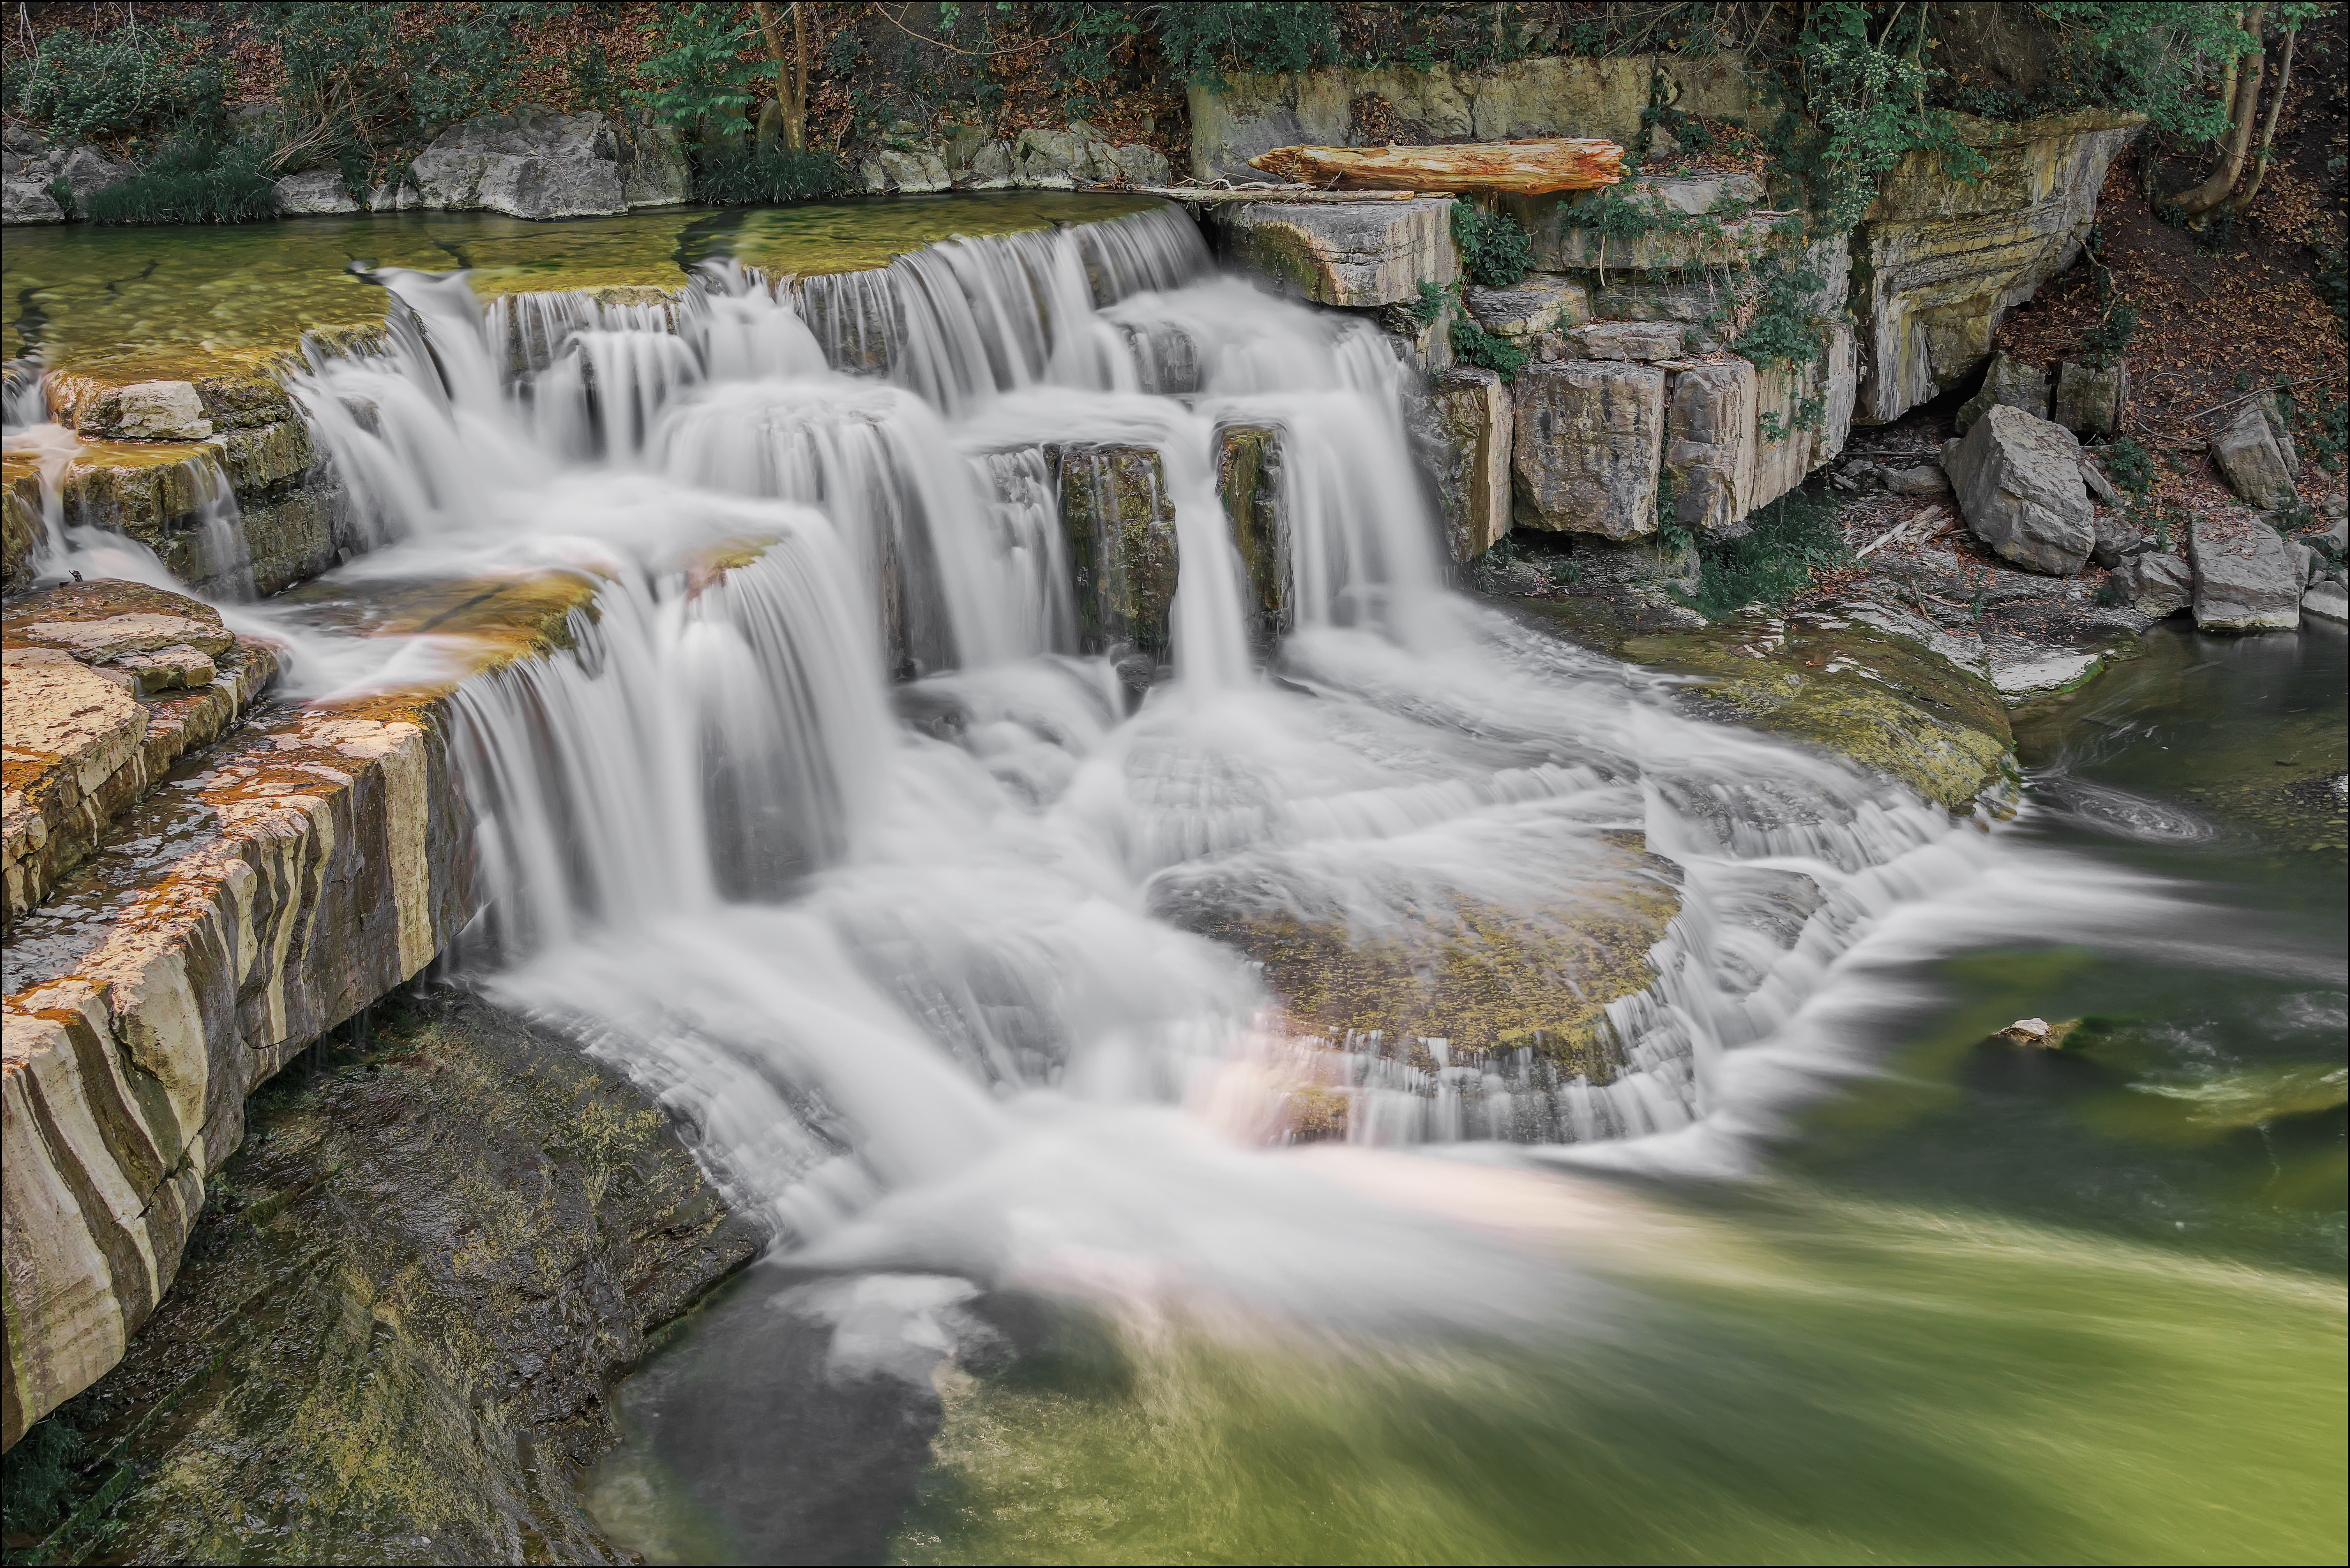 Waterfalls on Taughannock Creek in Upstate New York's Finger Lakes region